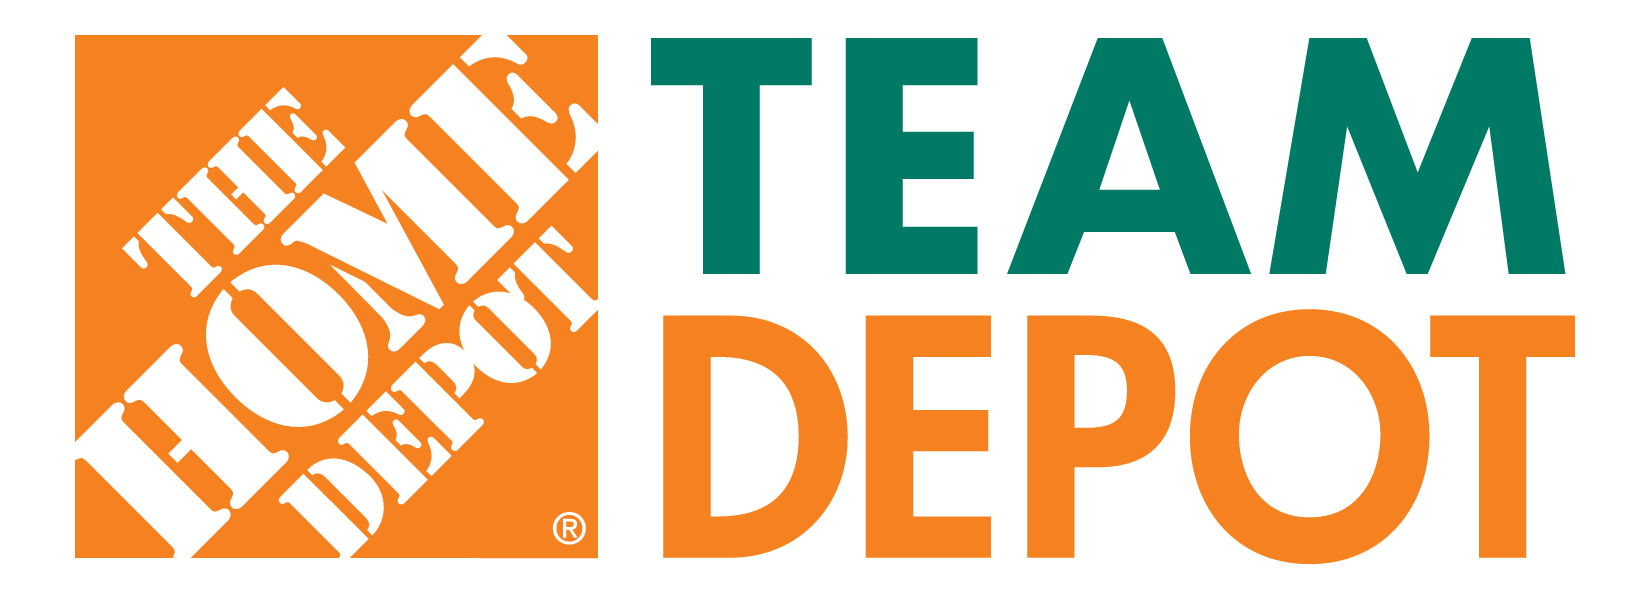 Home Depot logo jpg